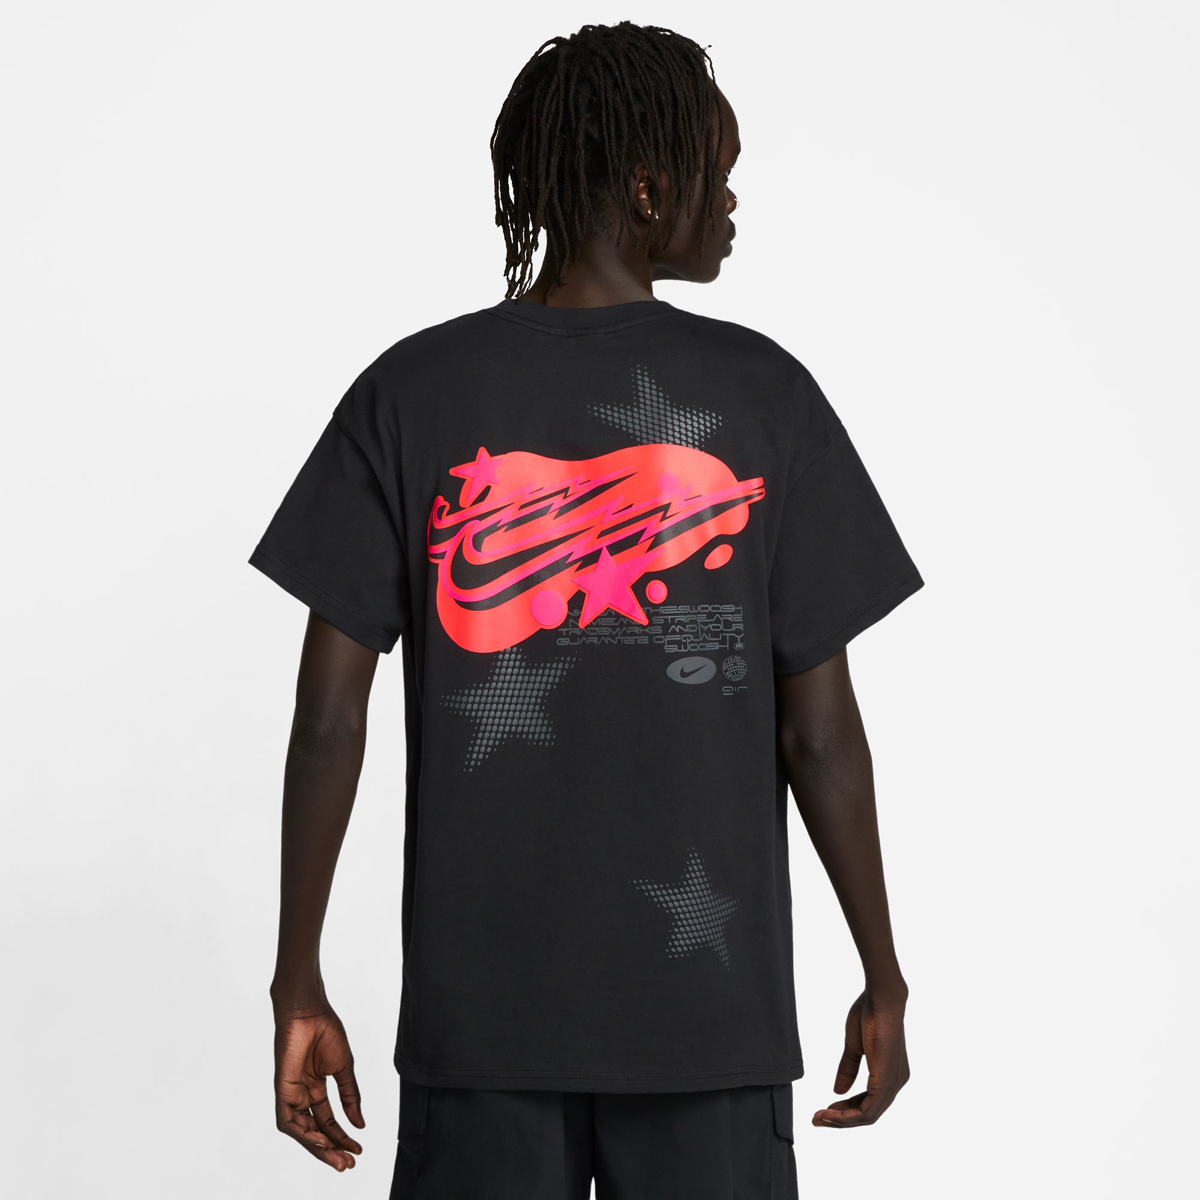 Nike-Electric-High-T-Shirt-Black-Red-Pink-2